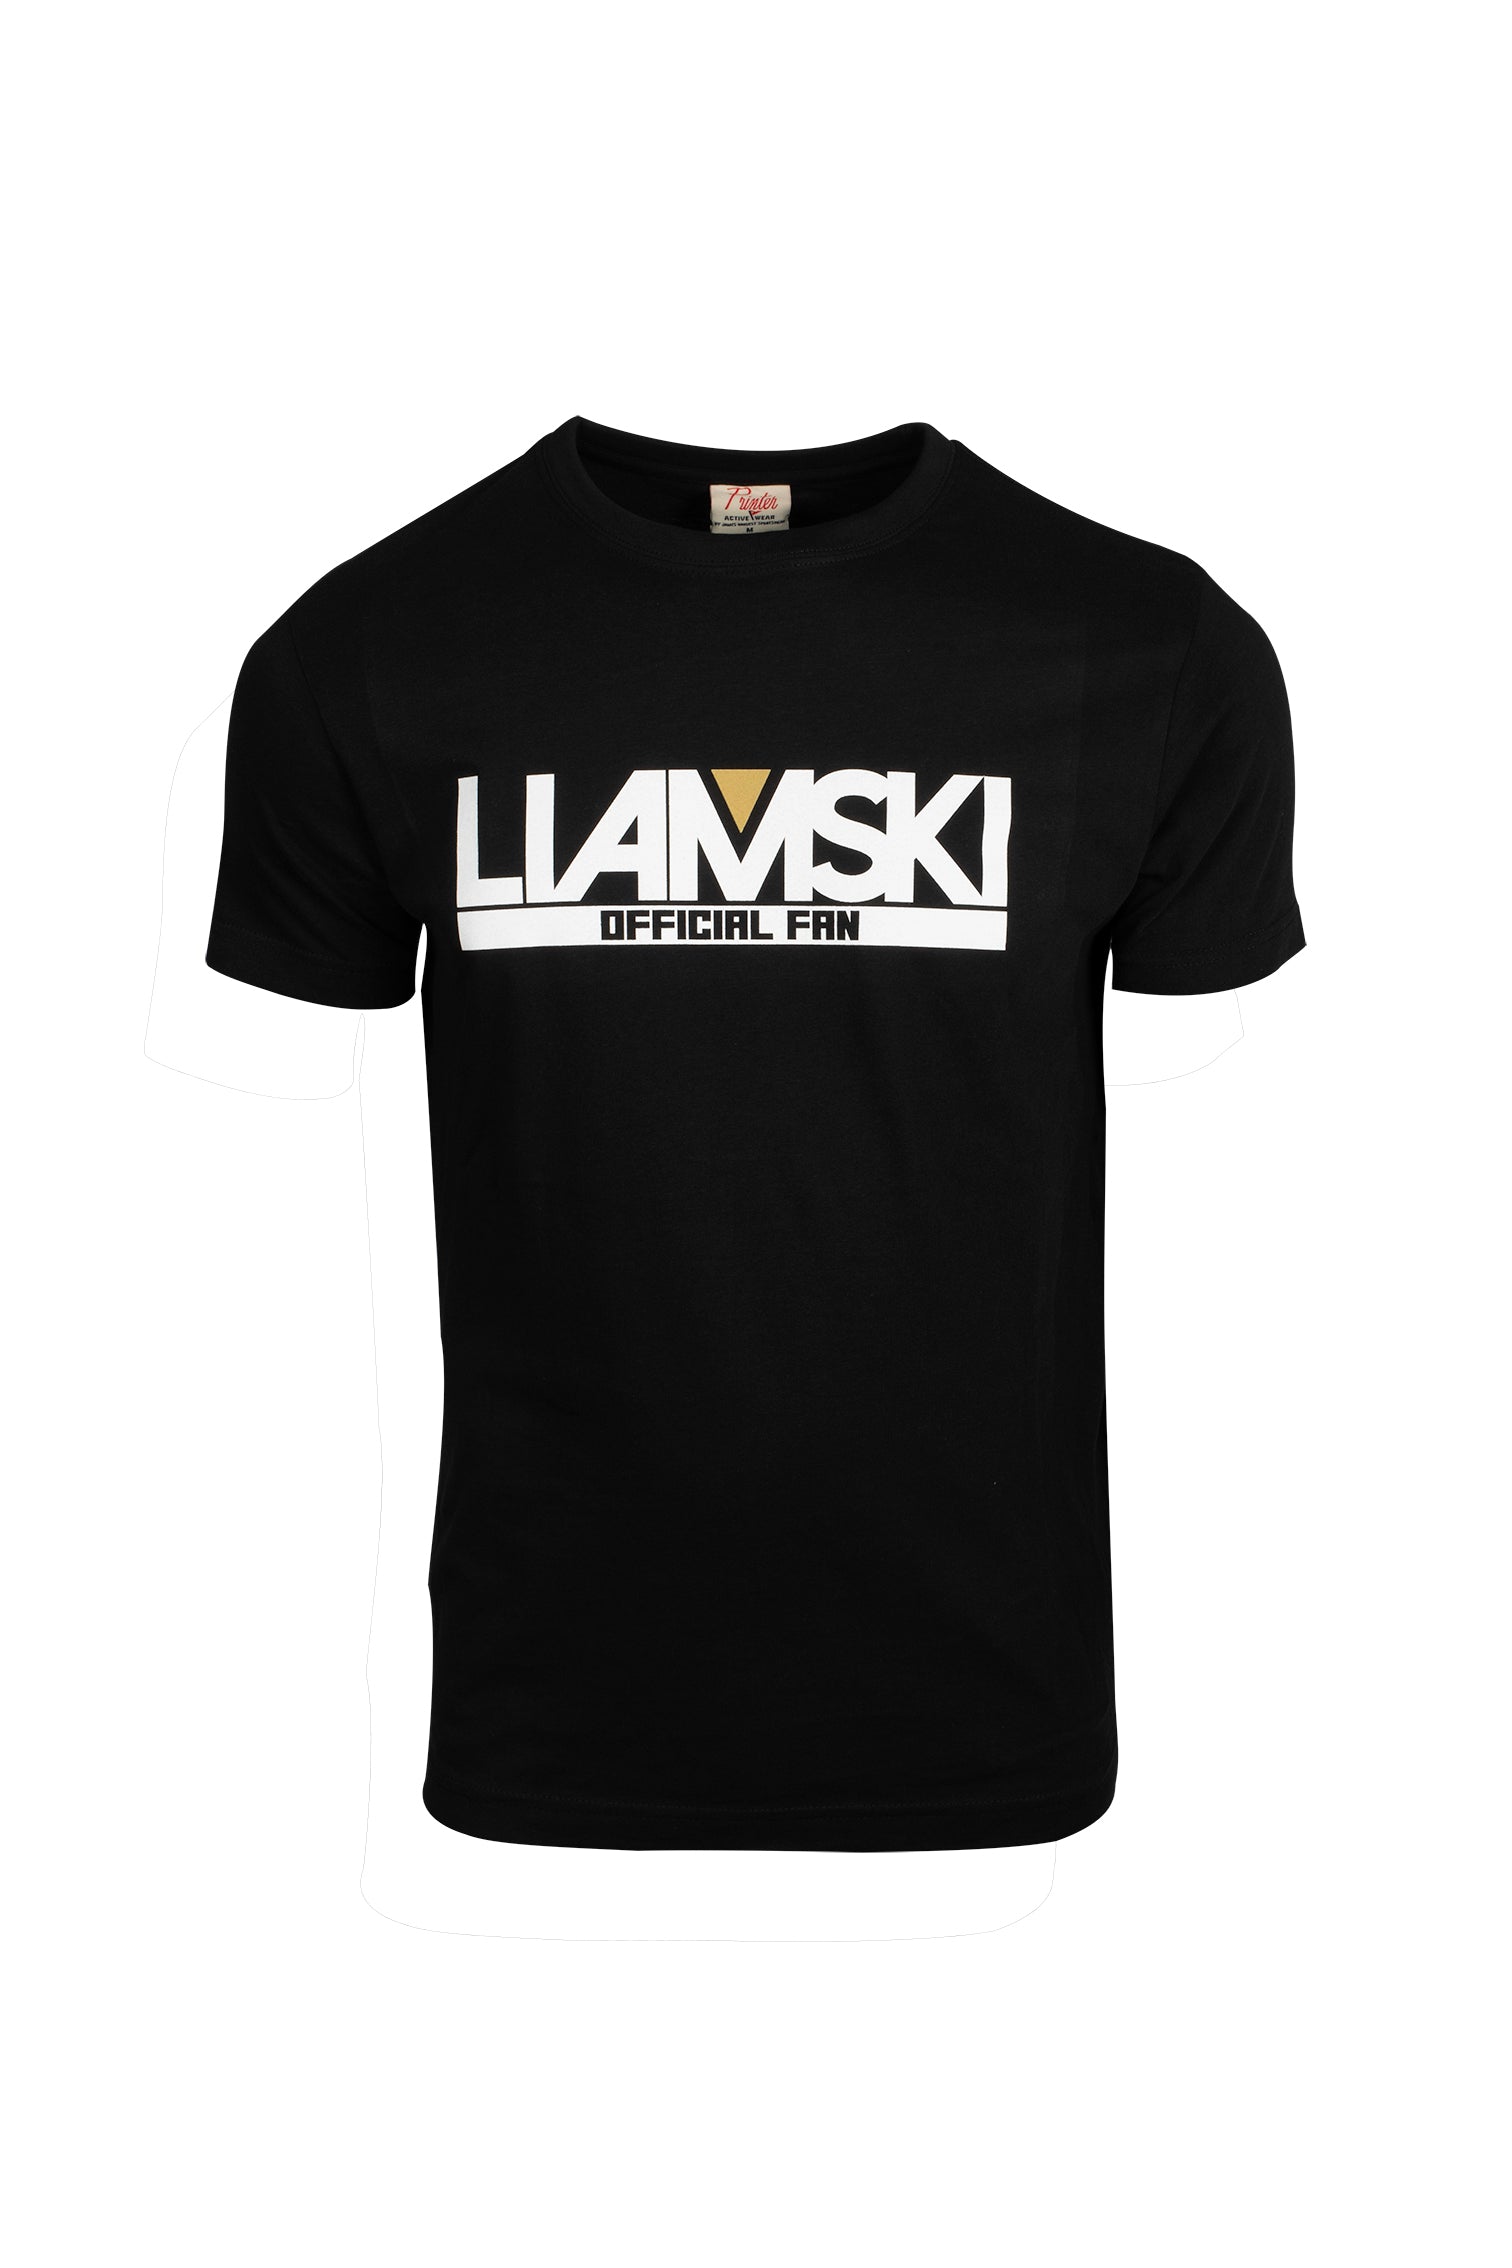 Official Fan Shirt Liam Everts - Black - Kids